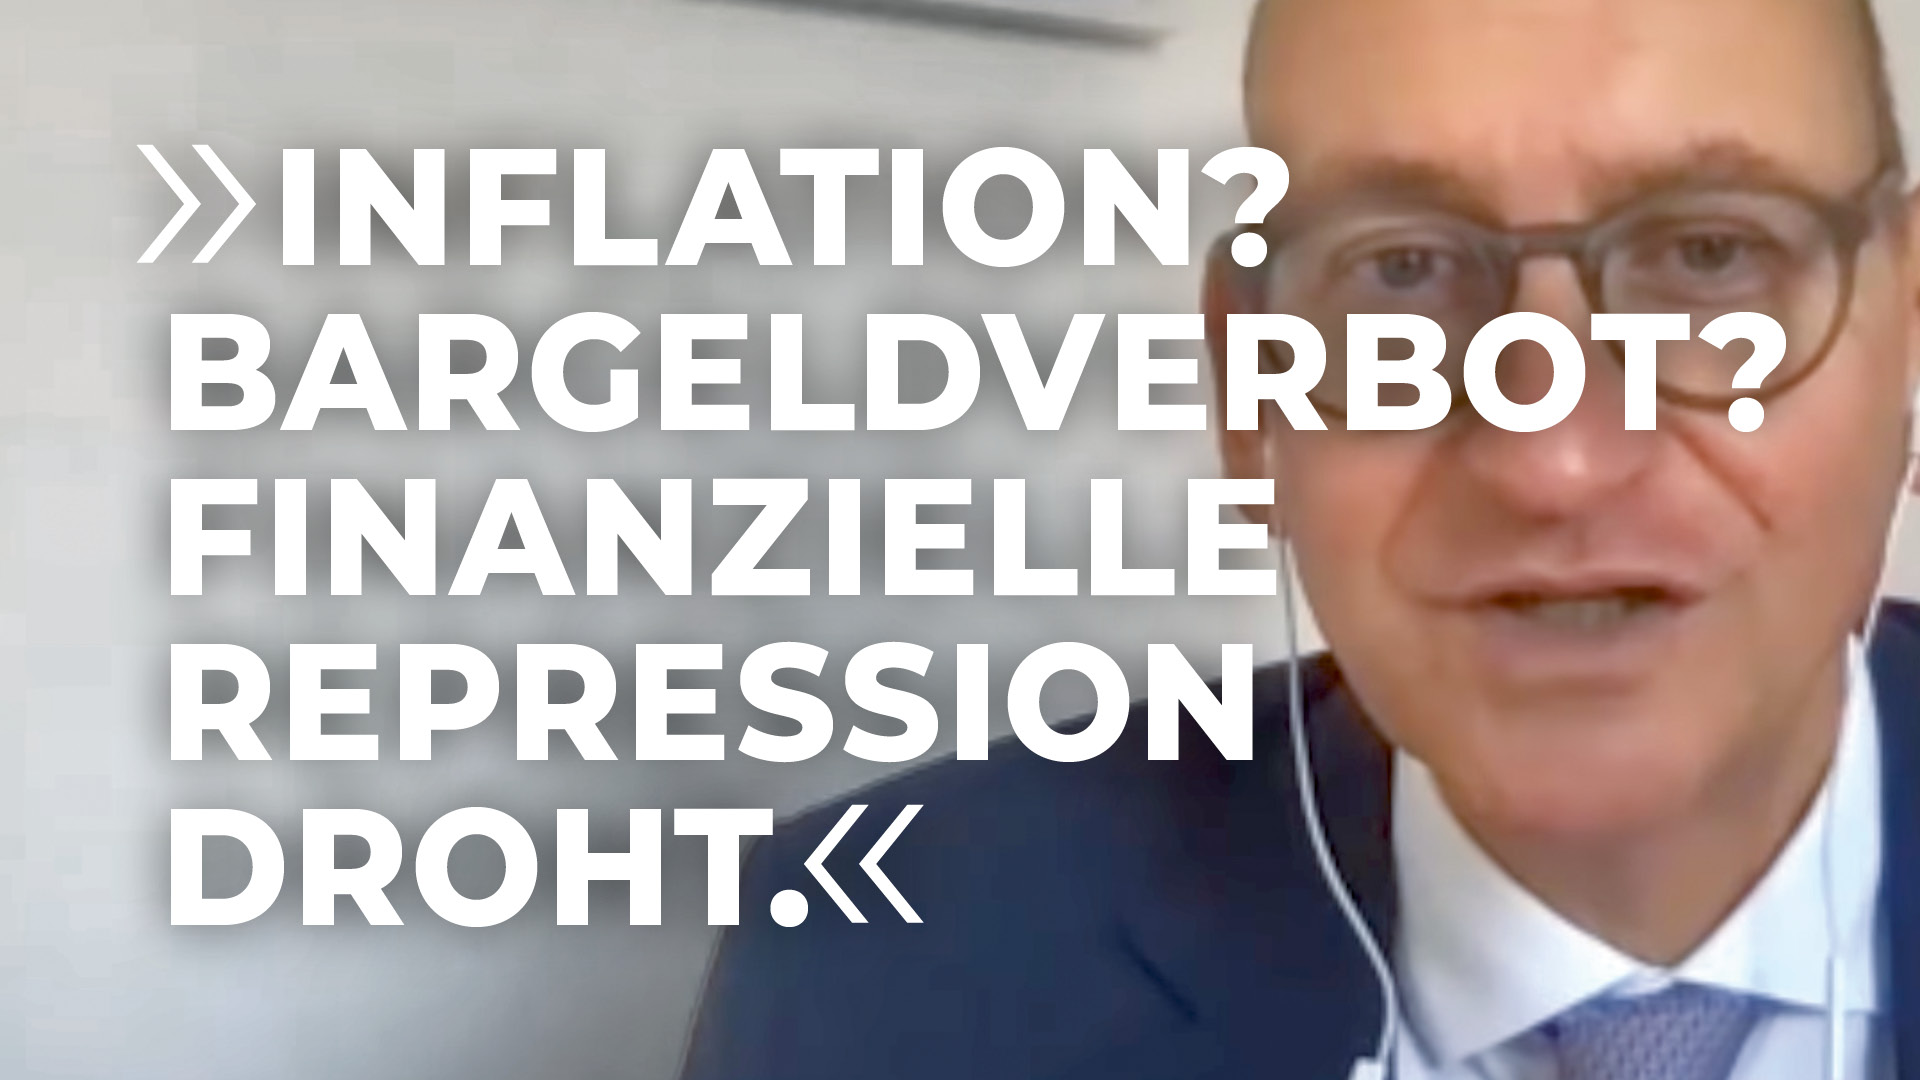 “Inflation? Bargeldverbot? Finanzielle Repression droht“